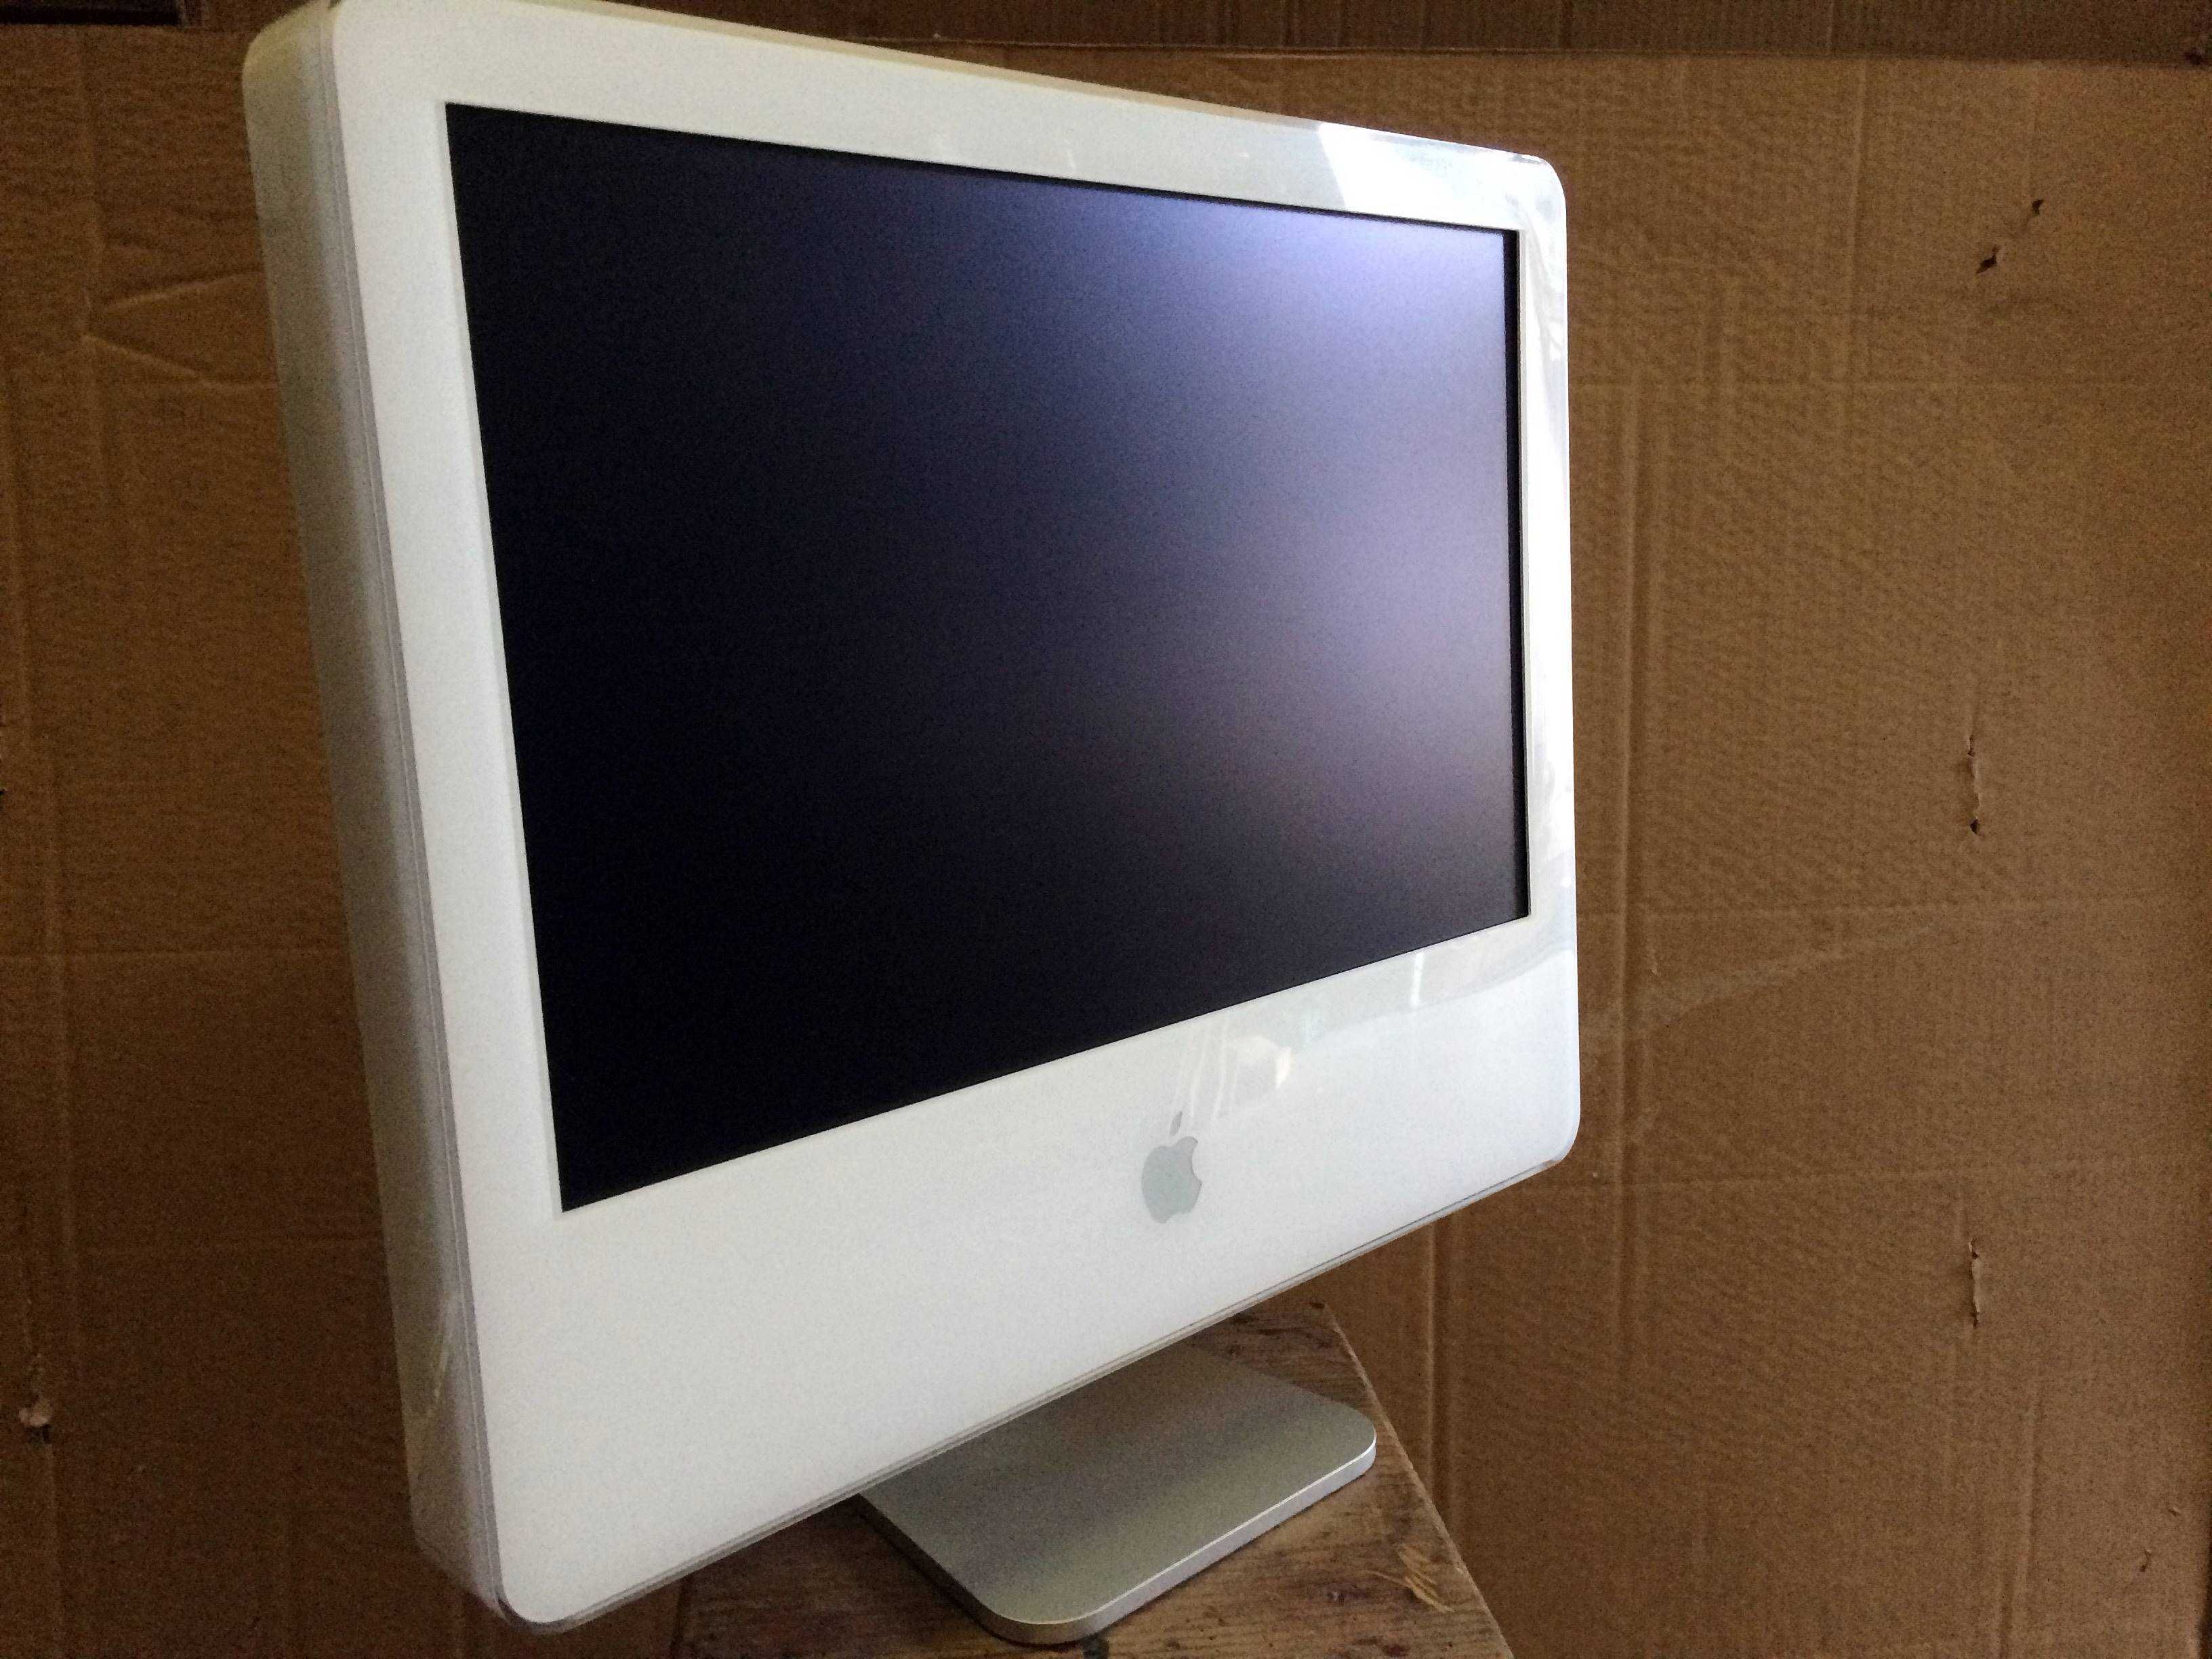 Apple iMac G5 1,8 20" - M9250LLA - PowerMac8,1 - A1076 - IRREPRENSIVÉL